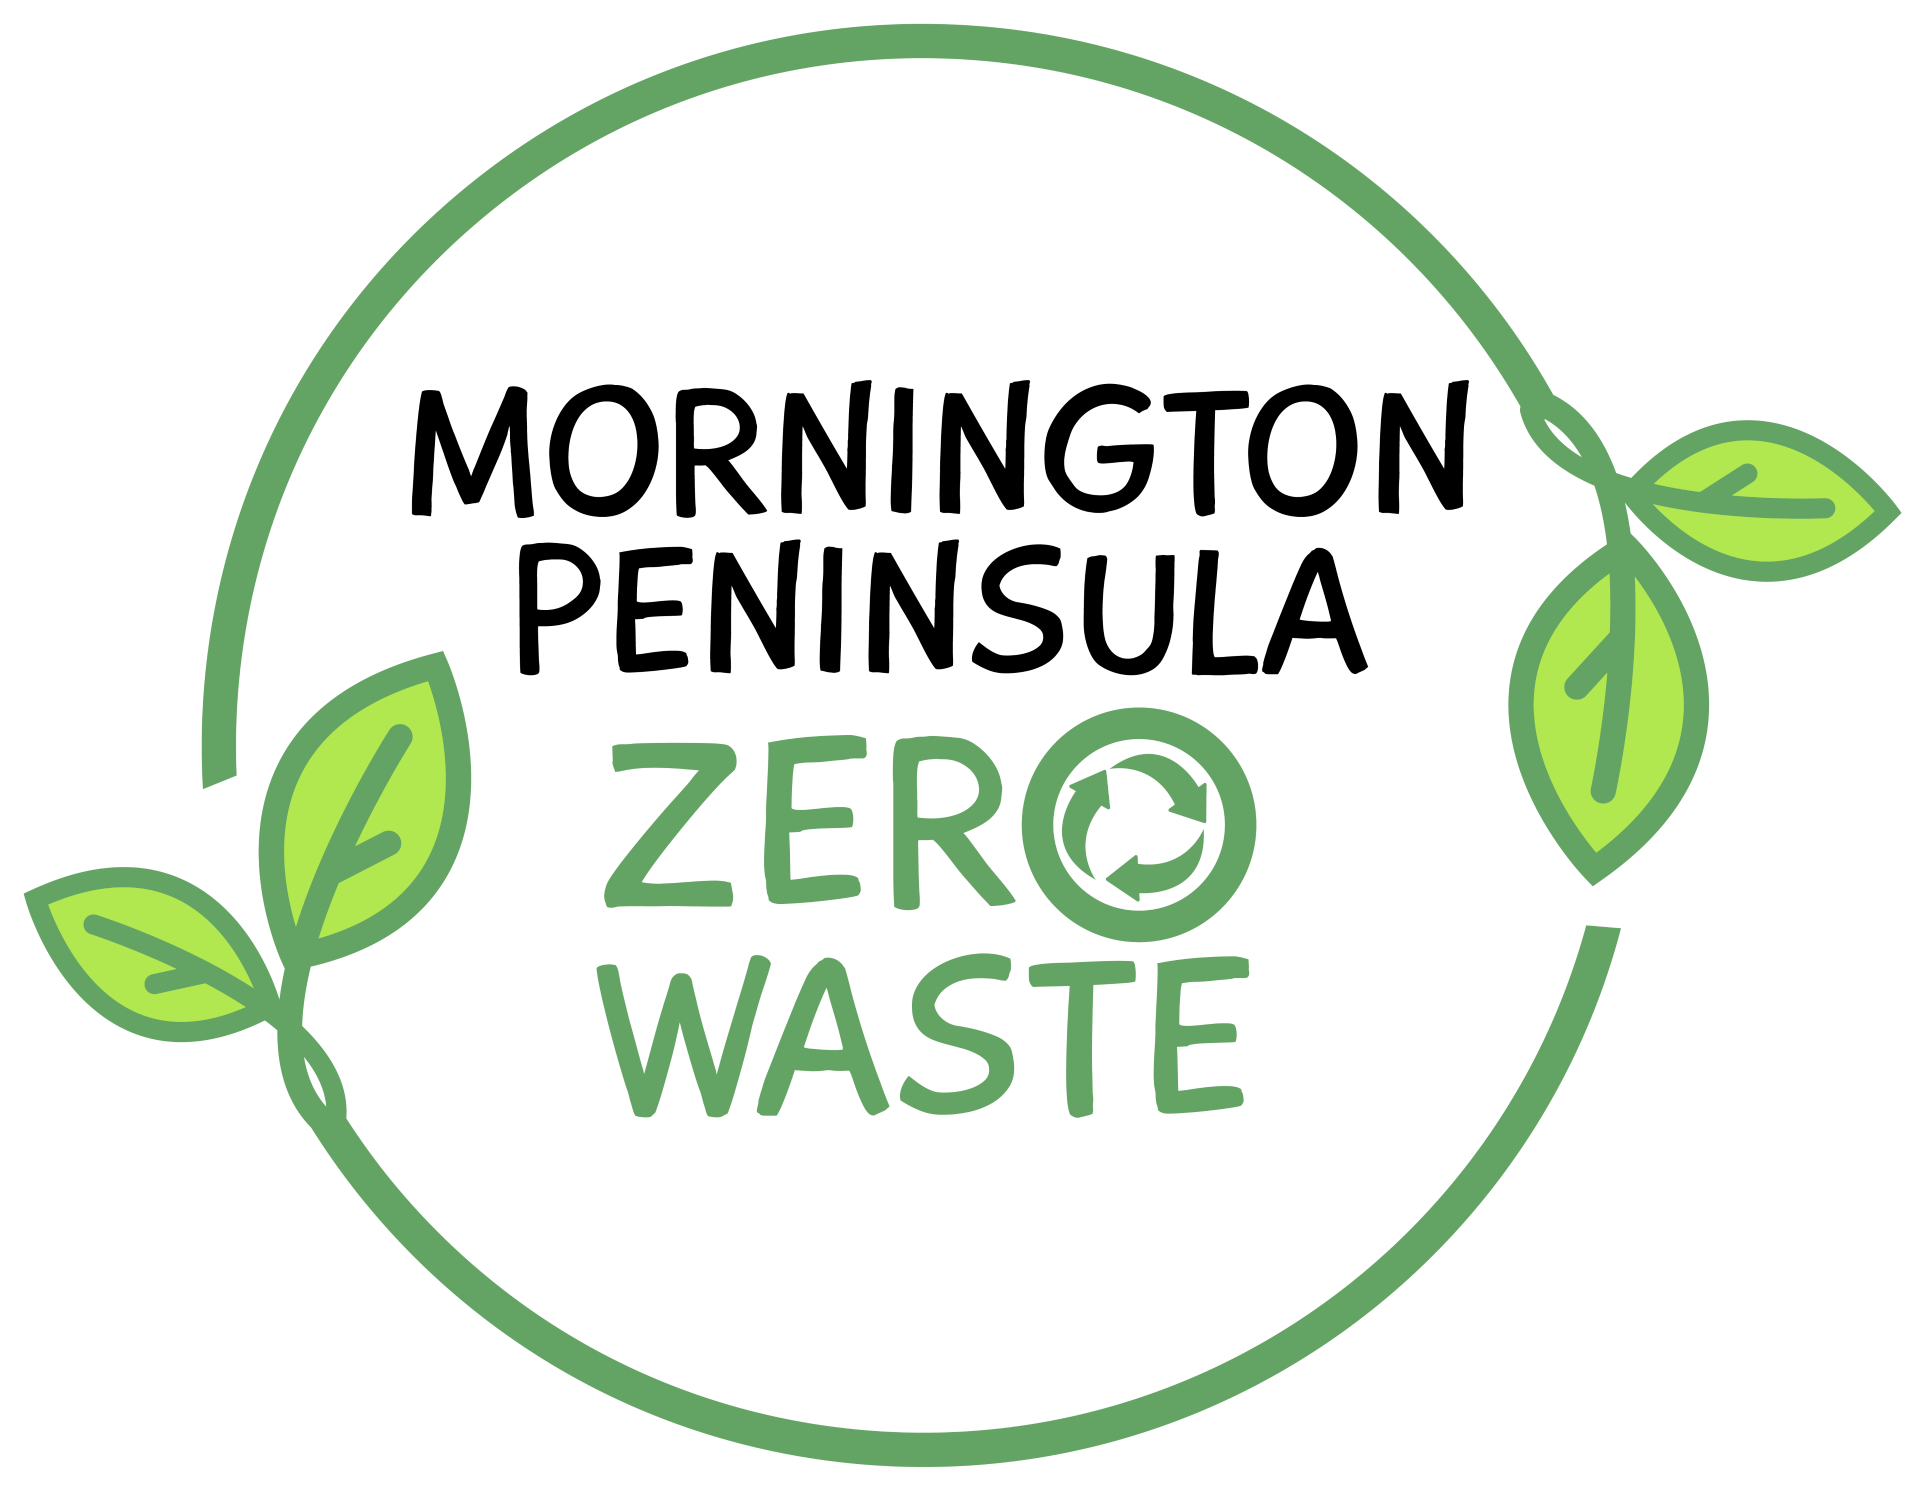 Mornington Peninsula Zero Waste